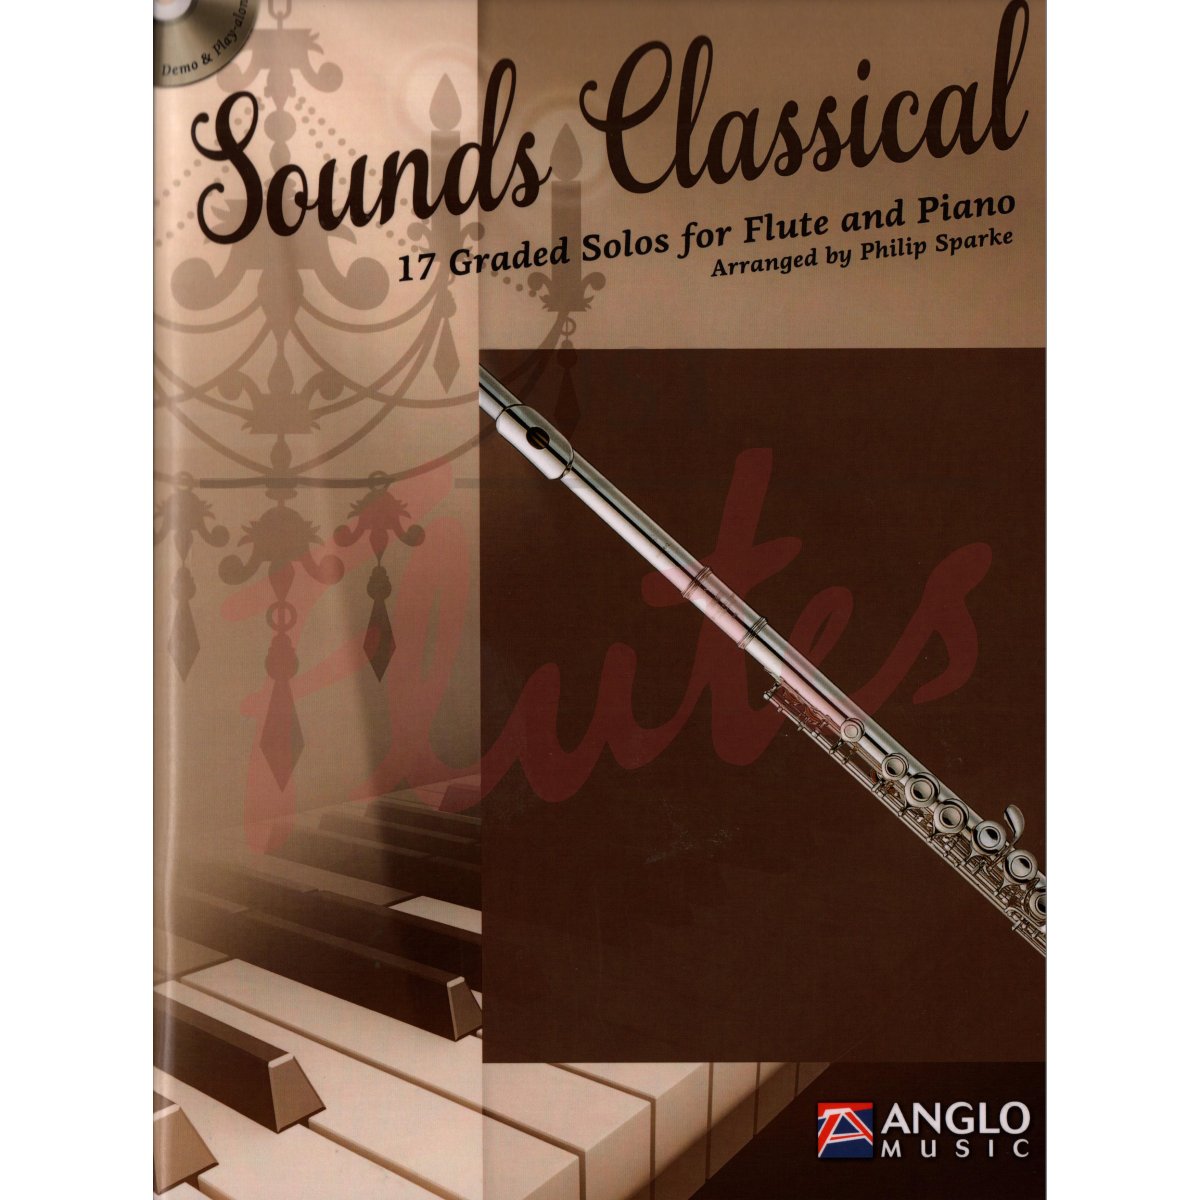 Sounds Classical [Flute]